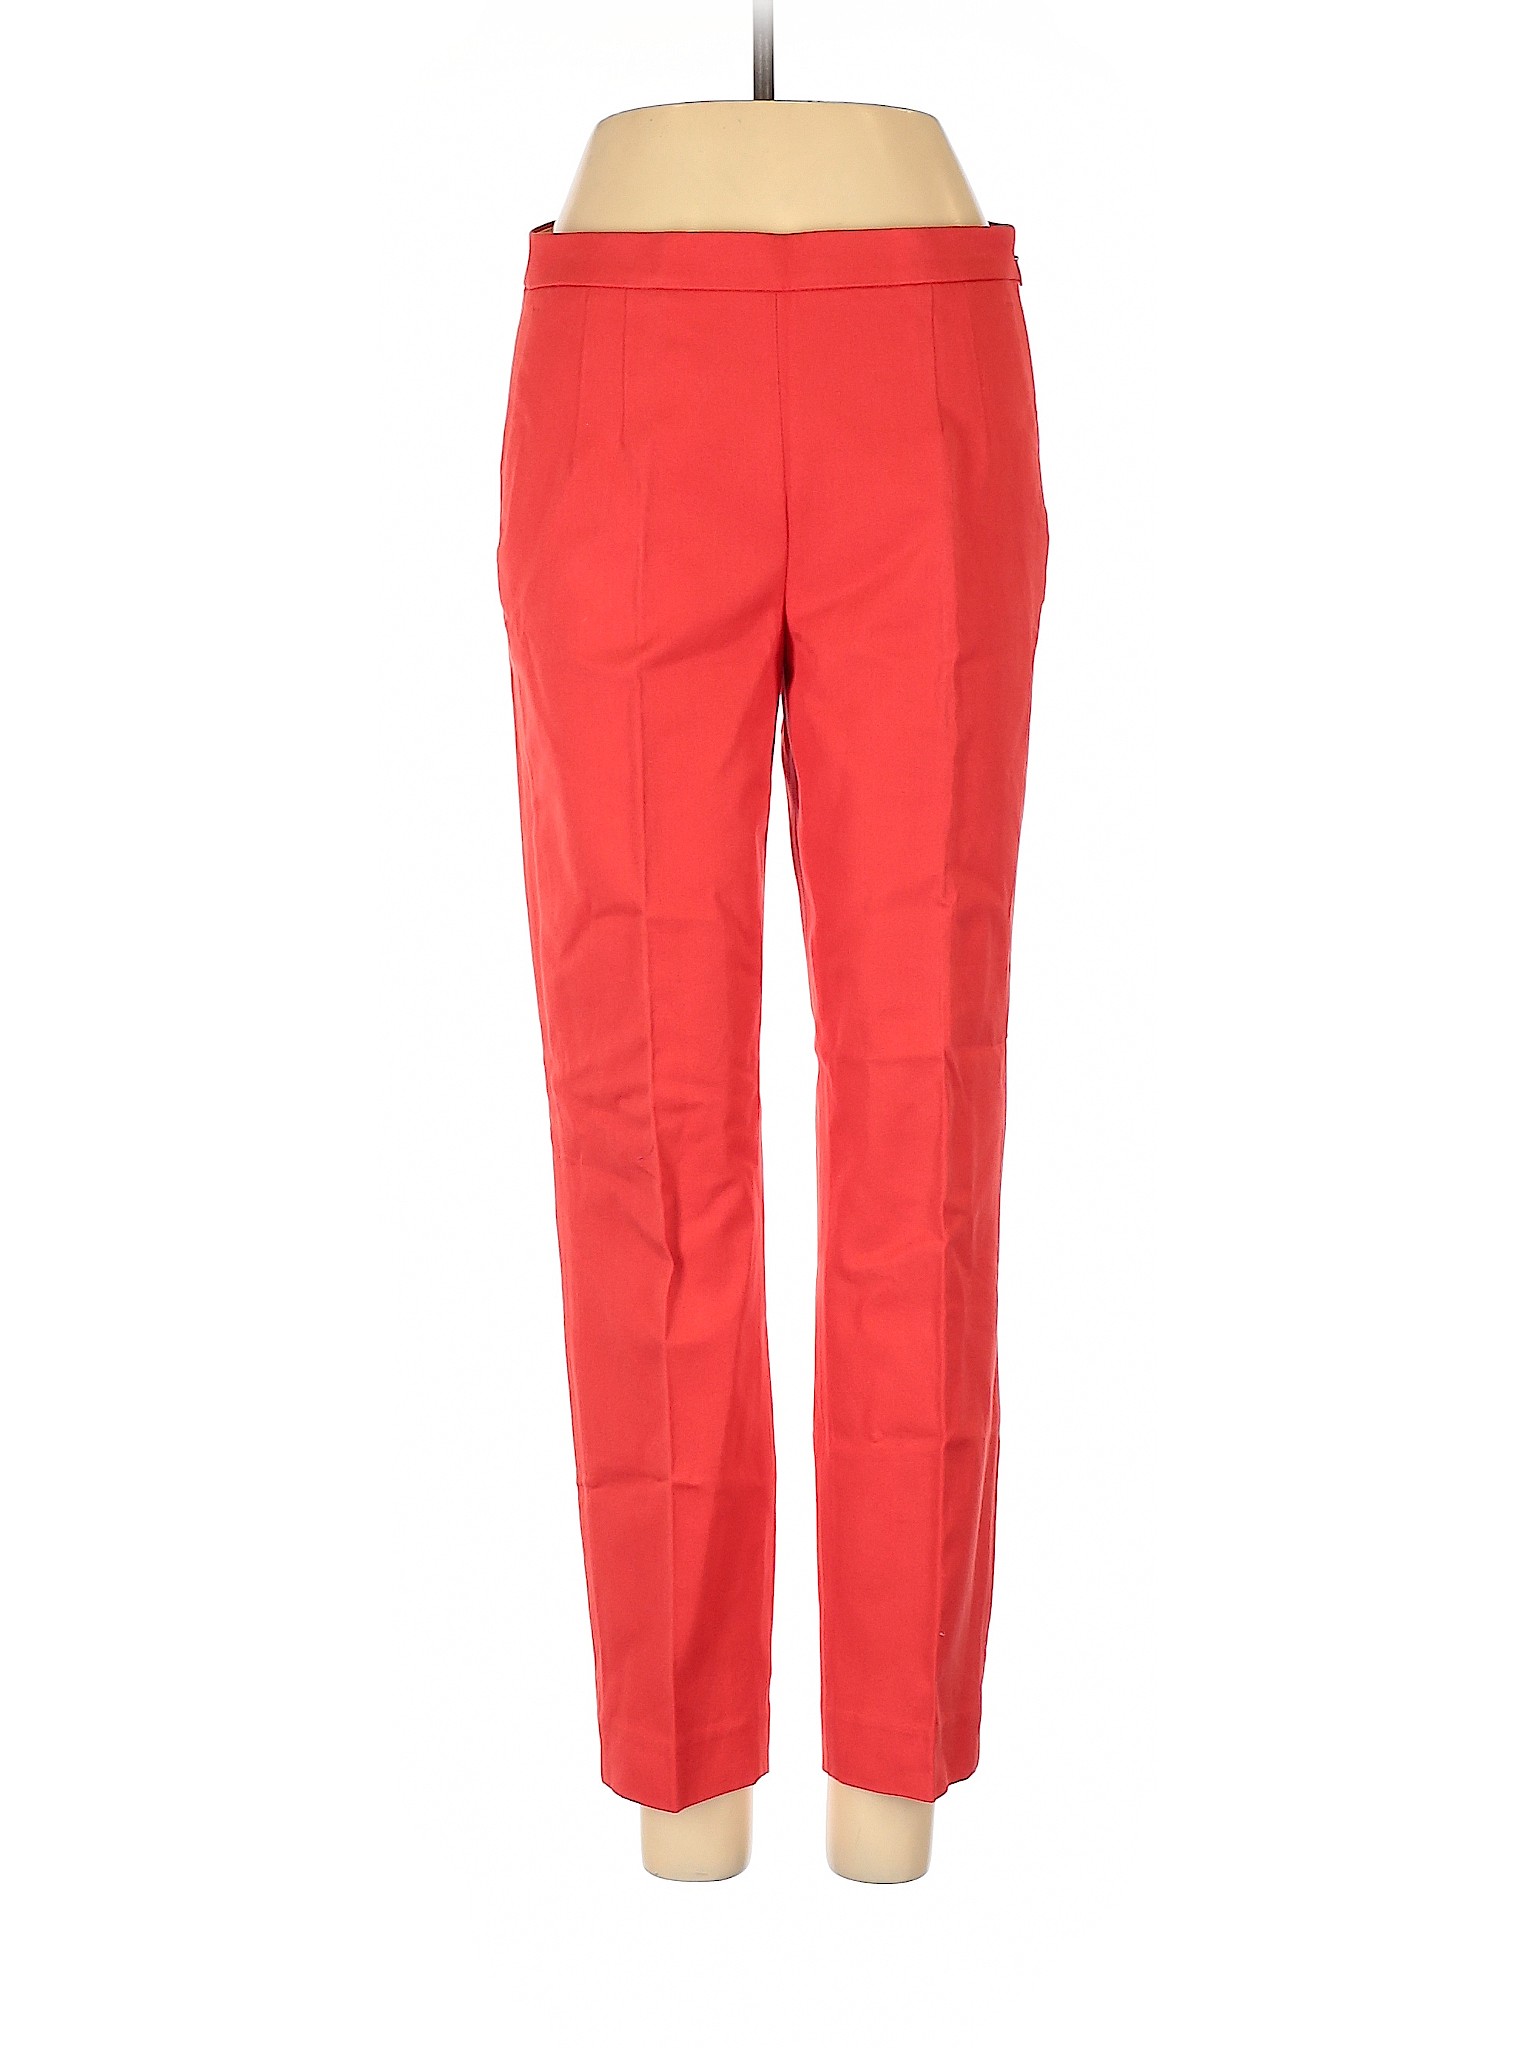 J.Crew Women Pink Dress Pants 4 | eBay